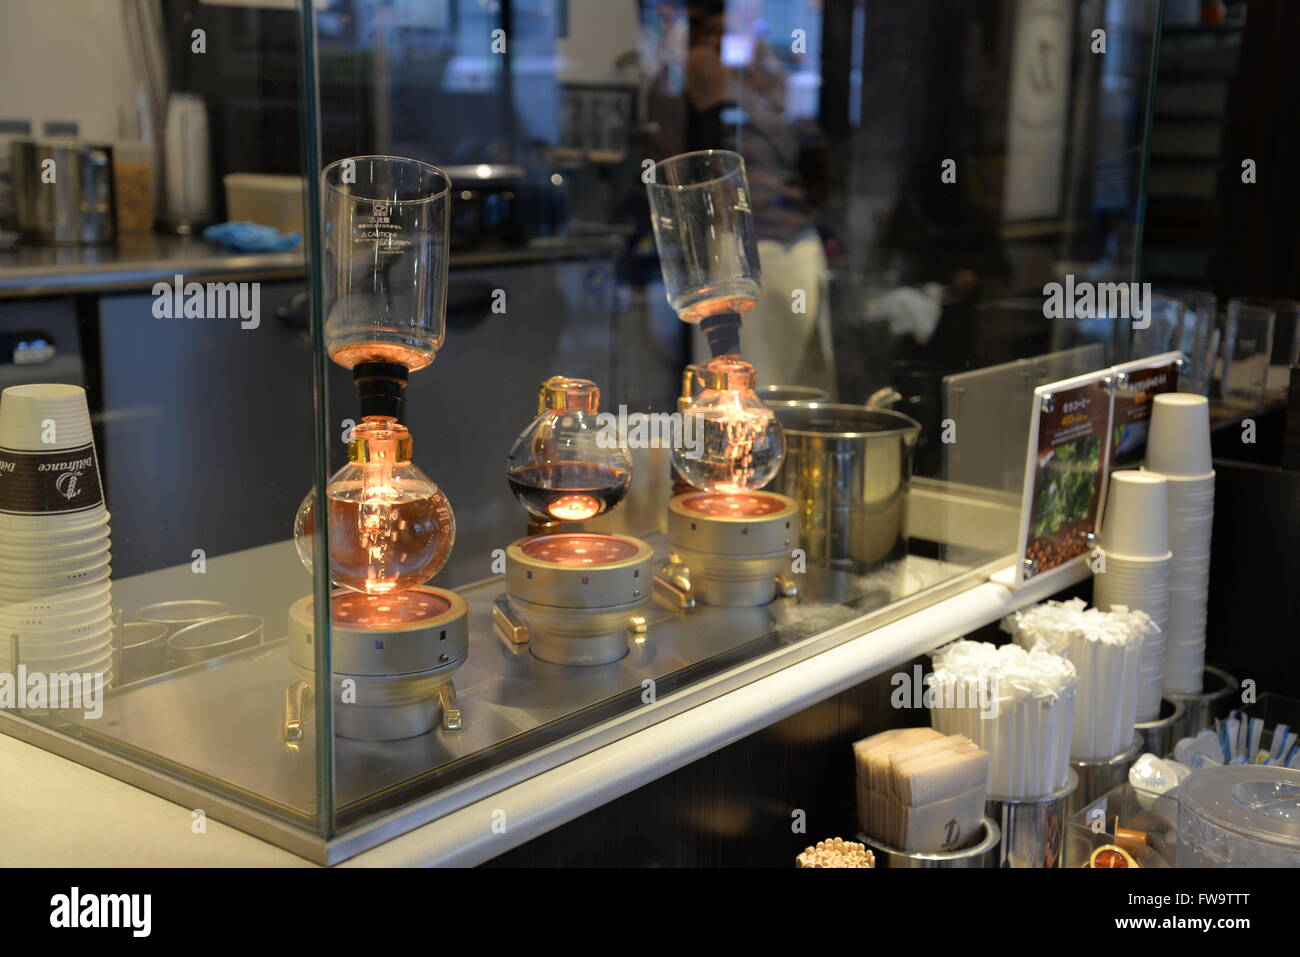 https://c8.alamy.com/comp/FW9TTT/glass-vacuum-coffee-makers-in-a-coffee-shop-in-kyoto-japan-FW9TTT.jpg